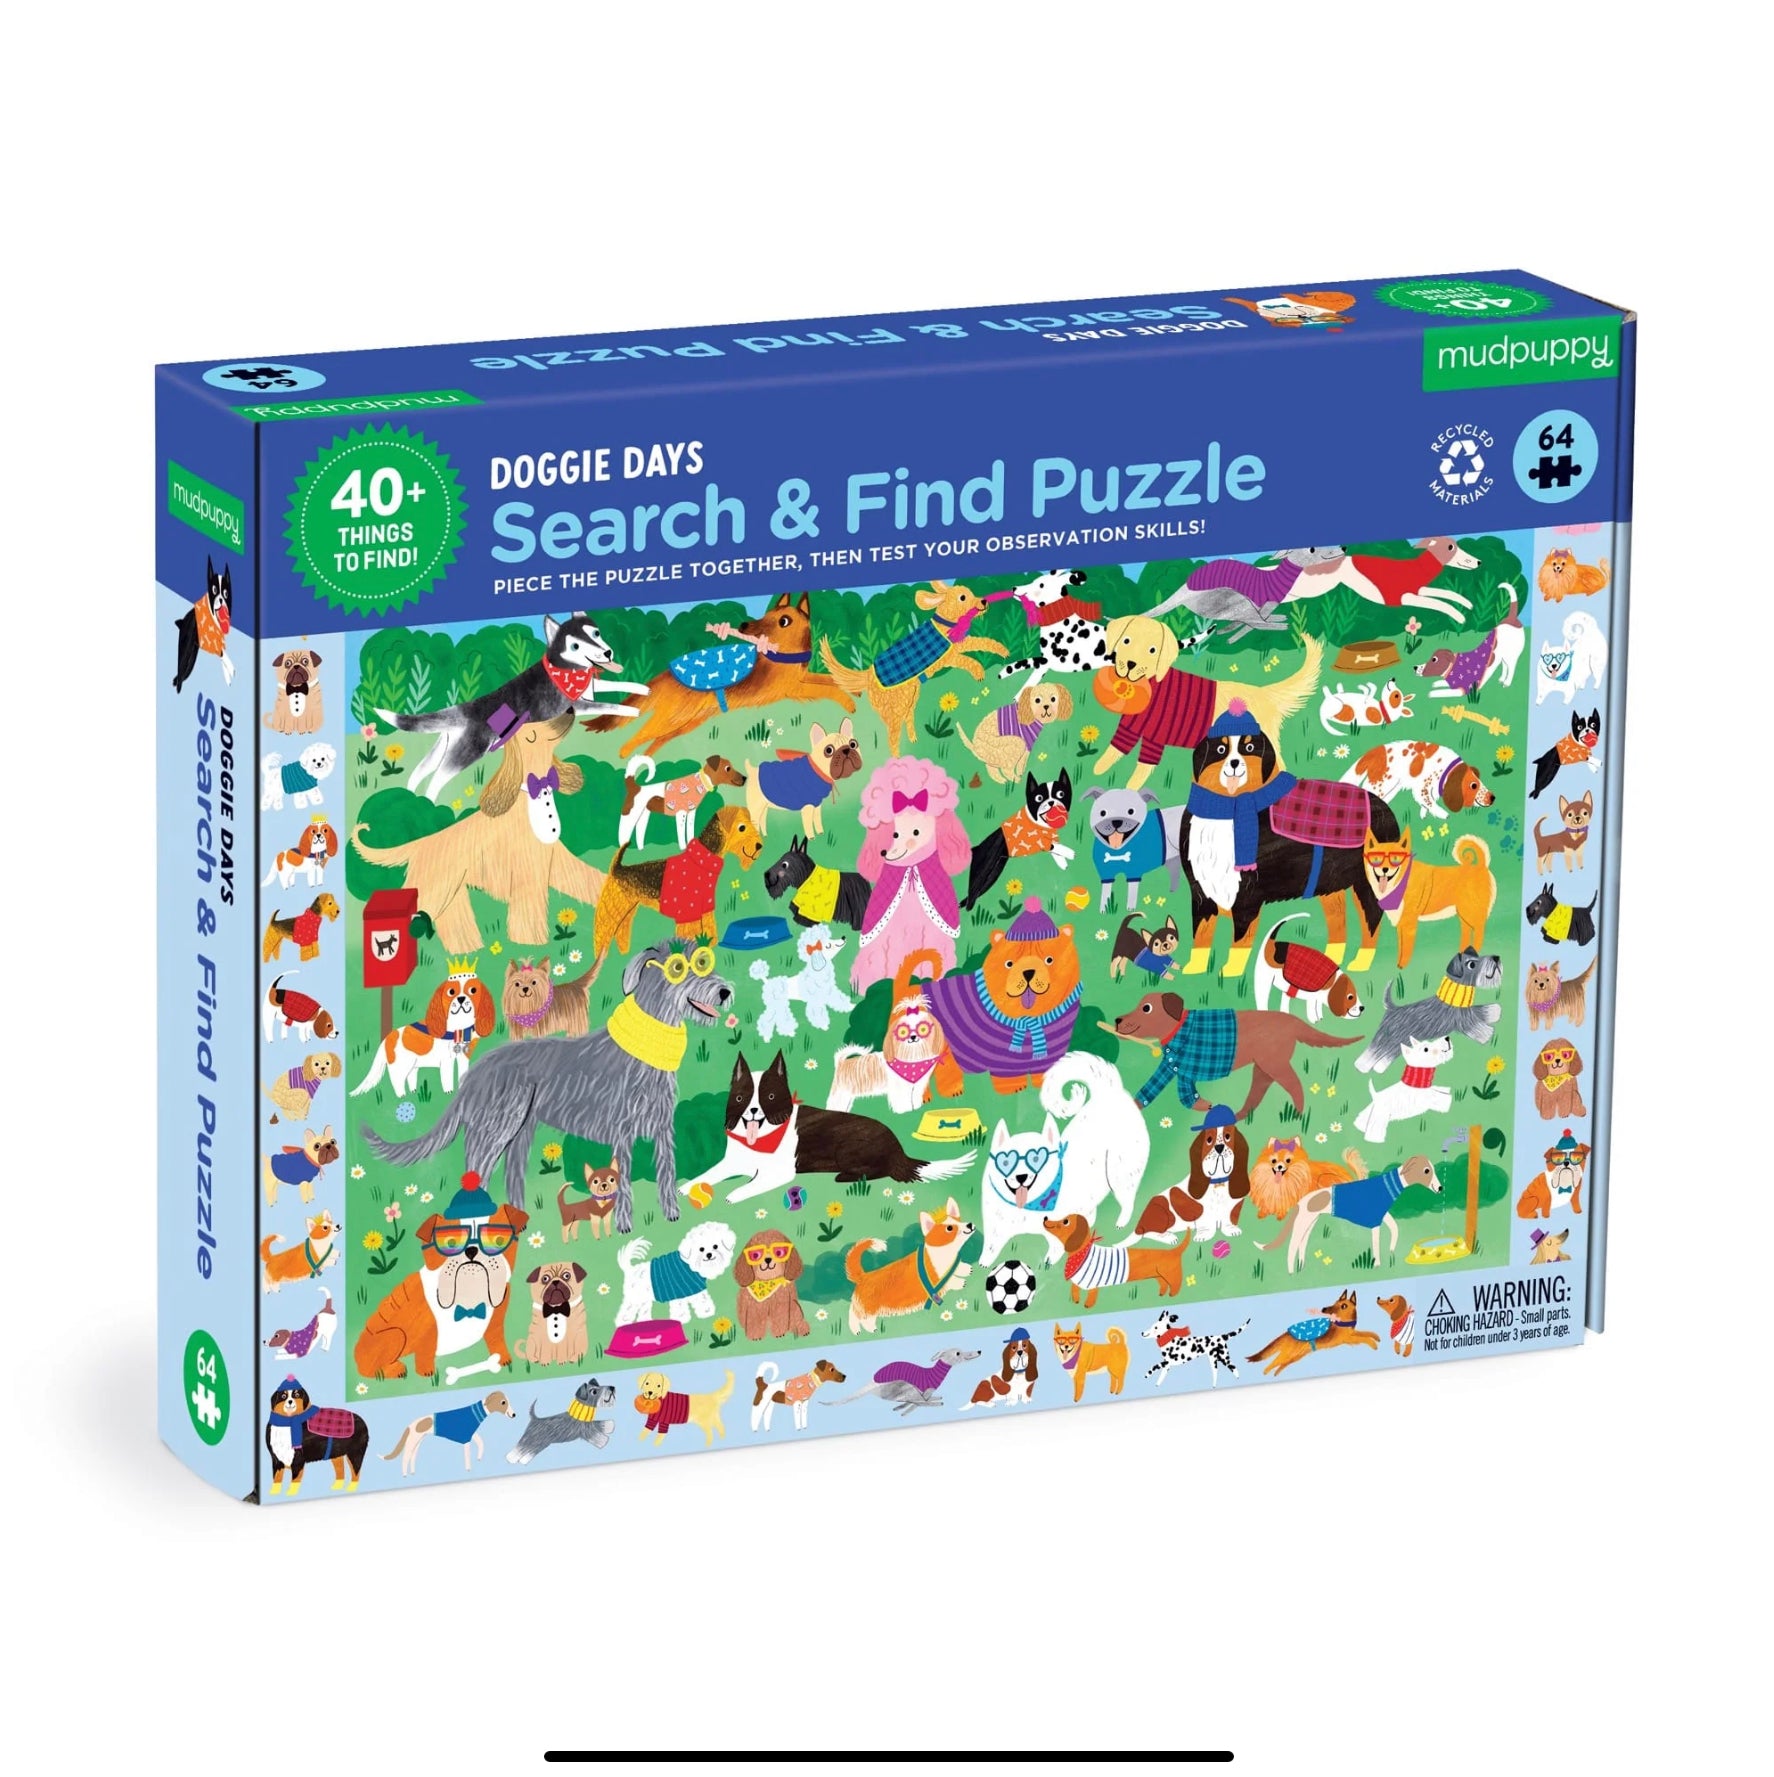 Doggie Park Search & Find 64piece puzzle